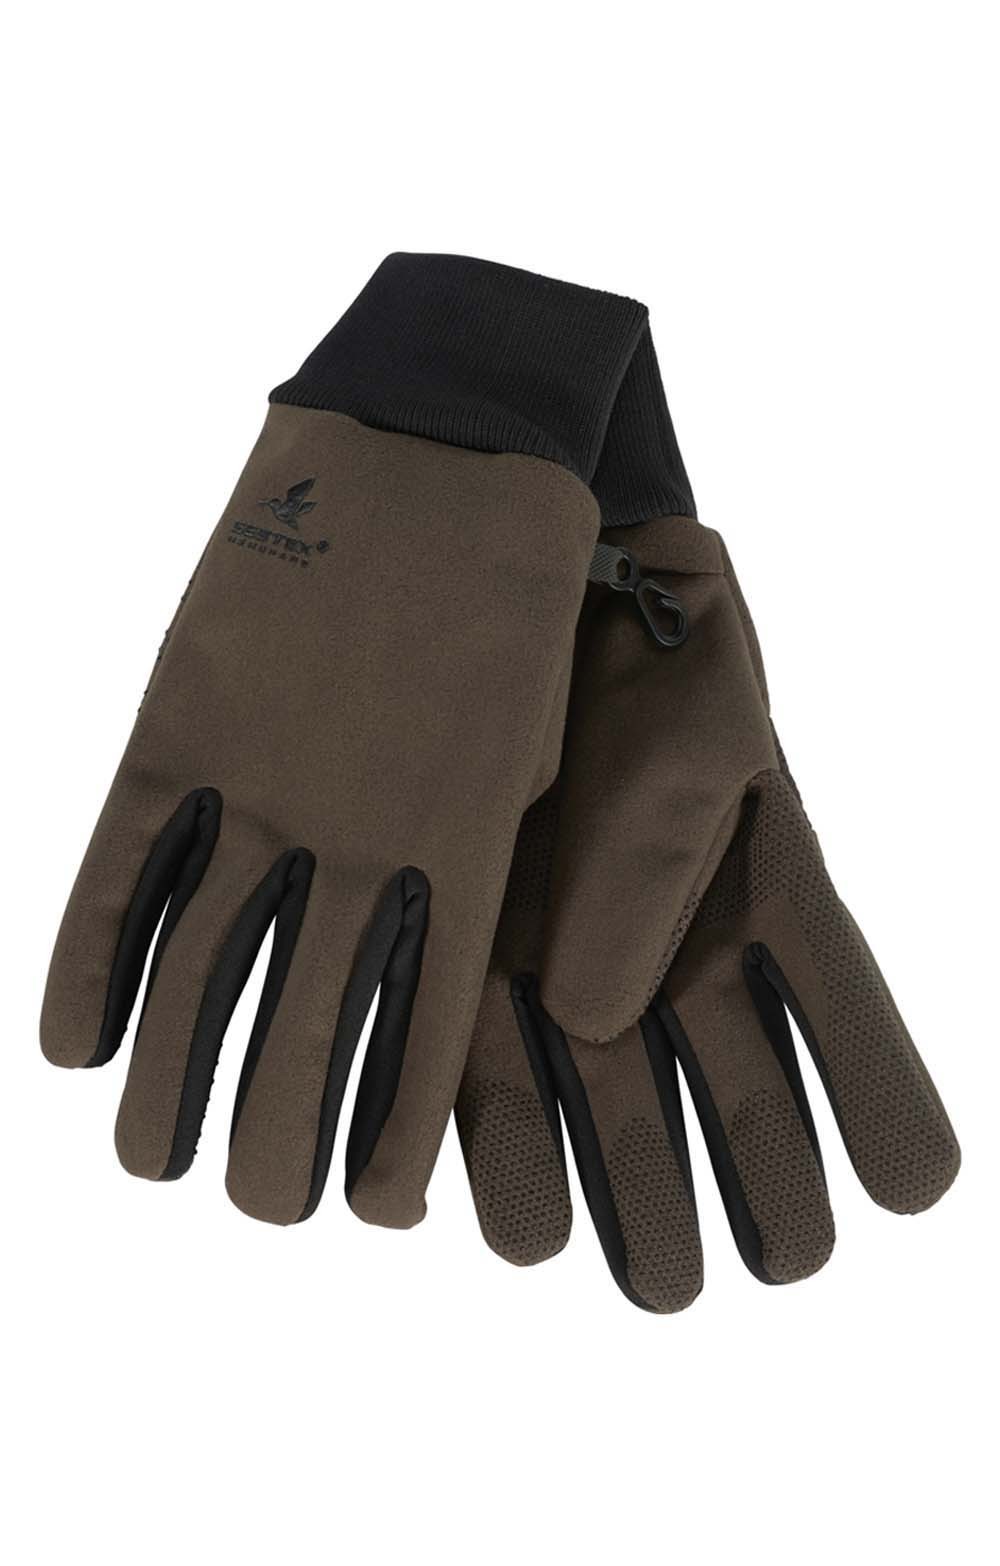 Hunting & Shooting Gloves